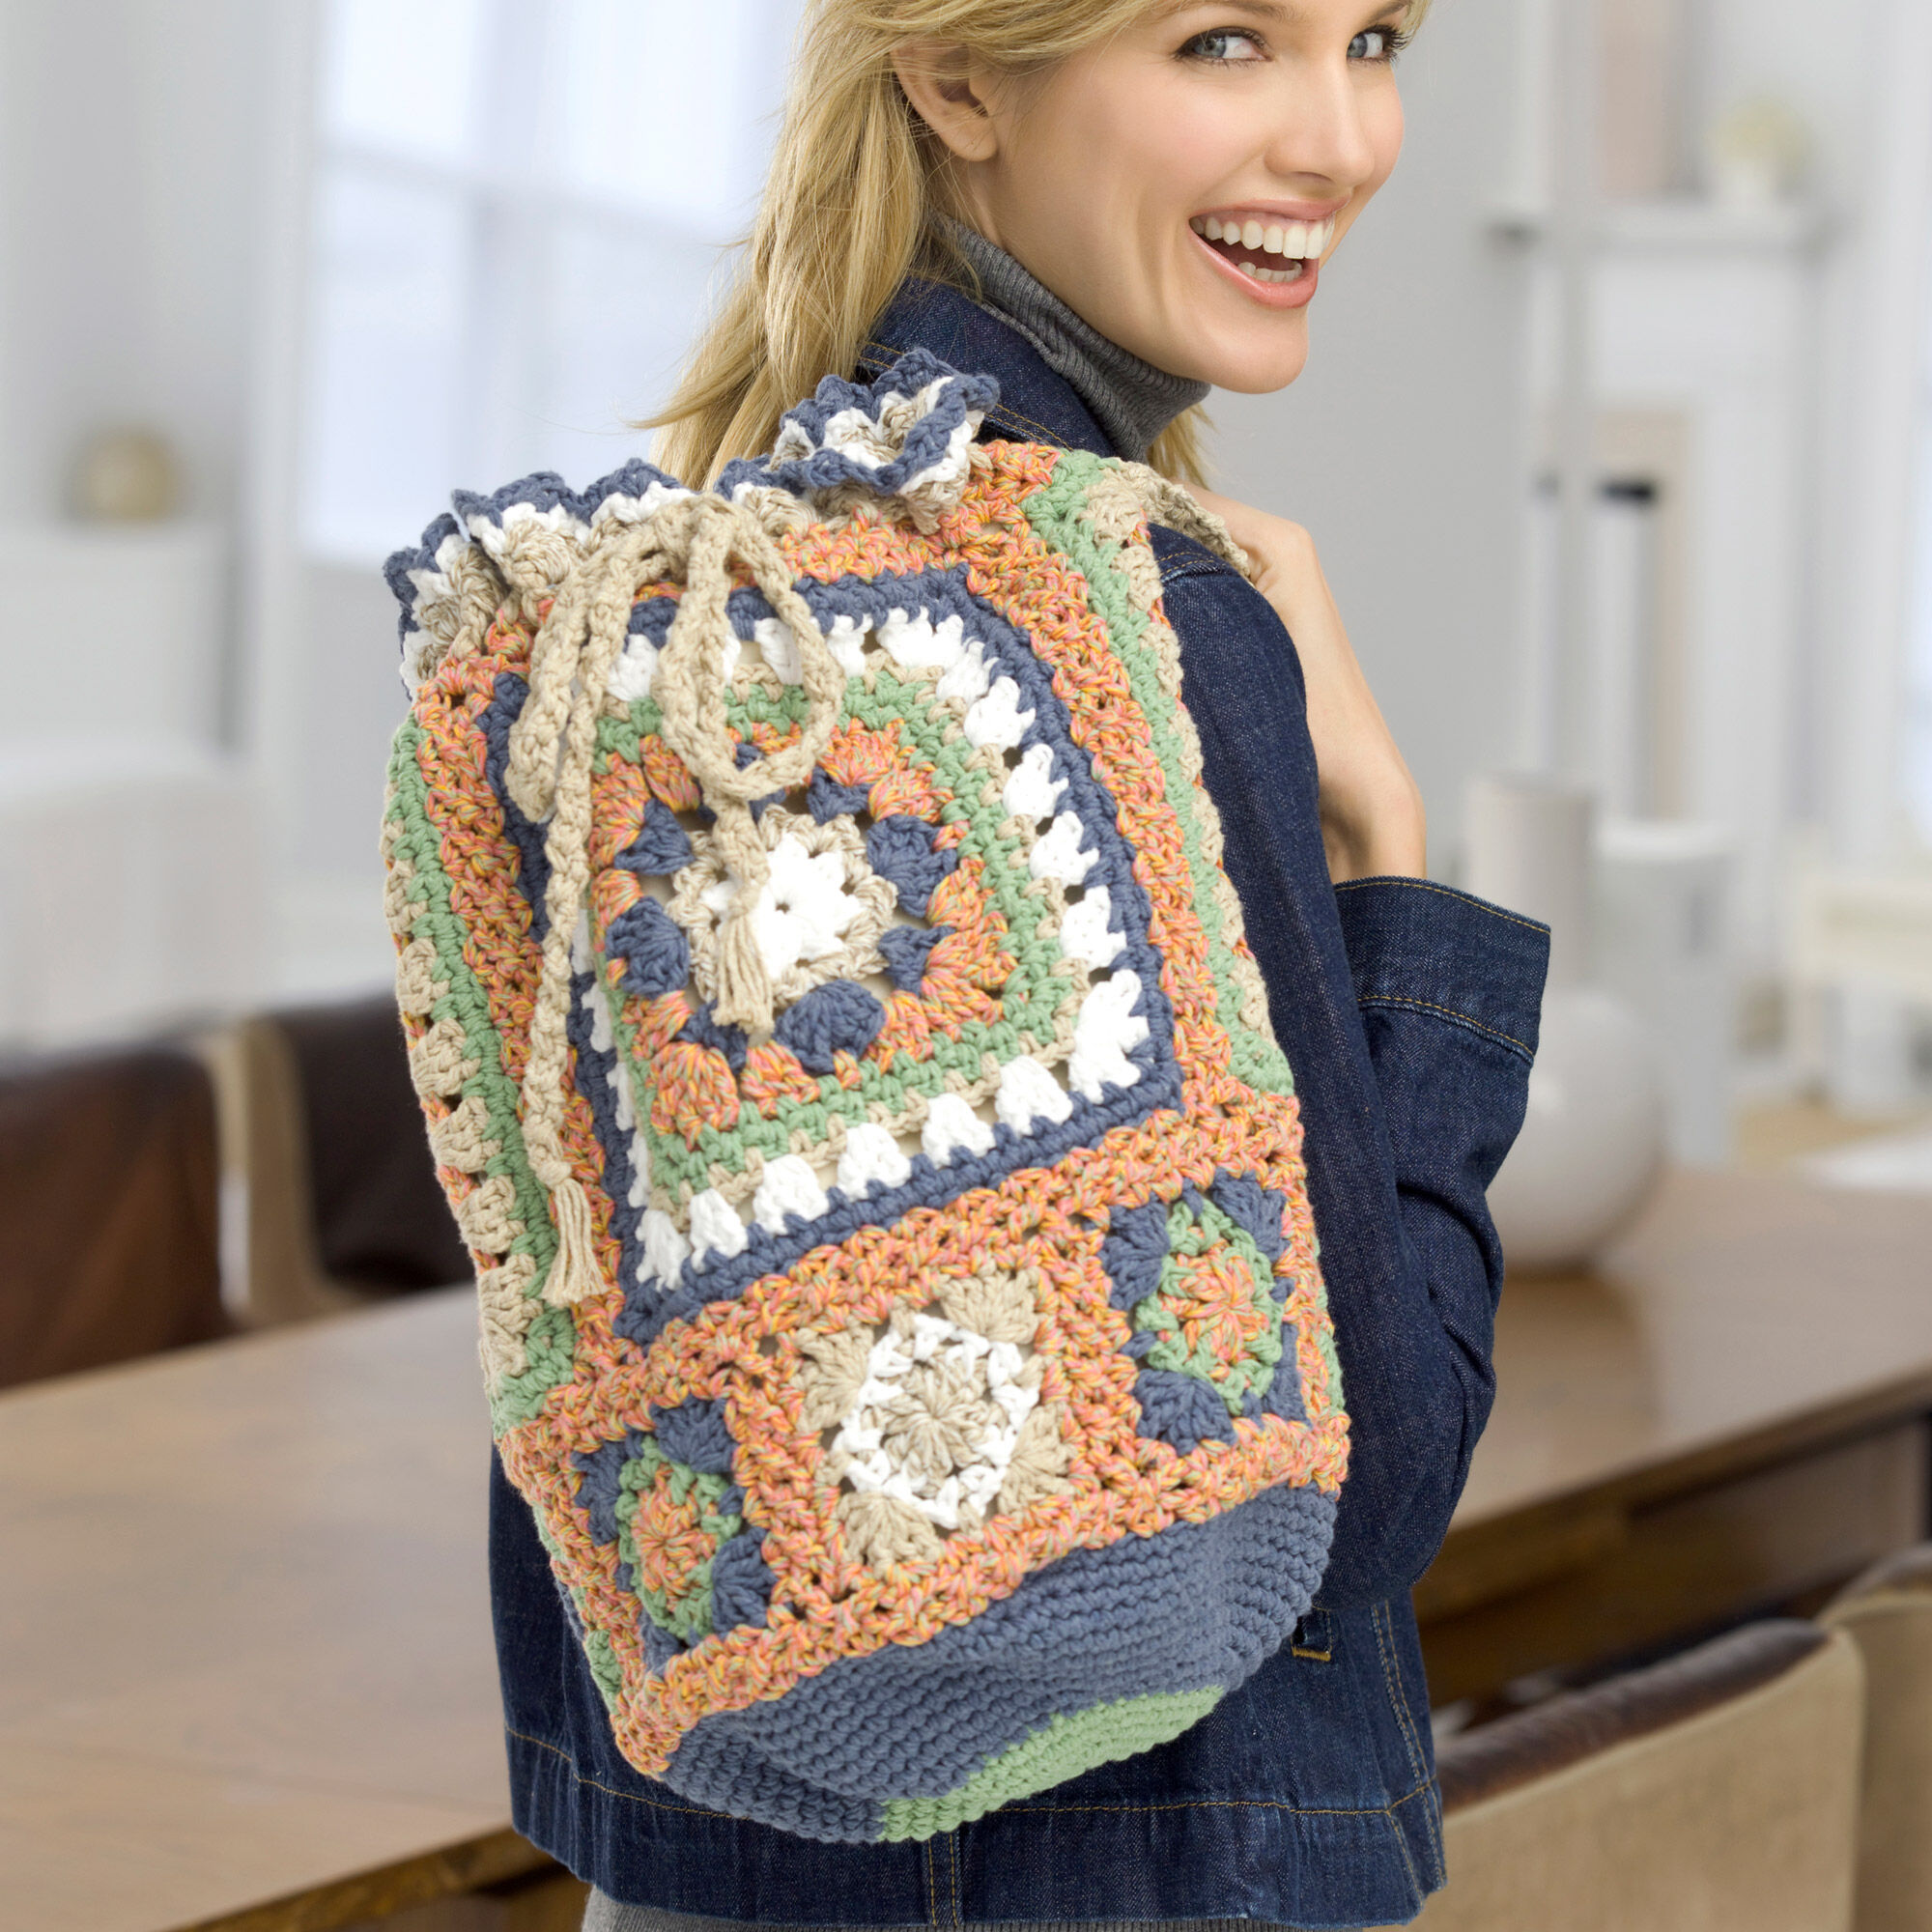 Crochet Patterns Galore - Oversized Granny Bag